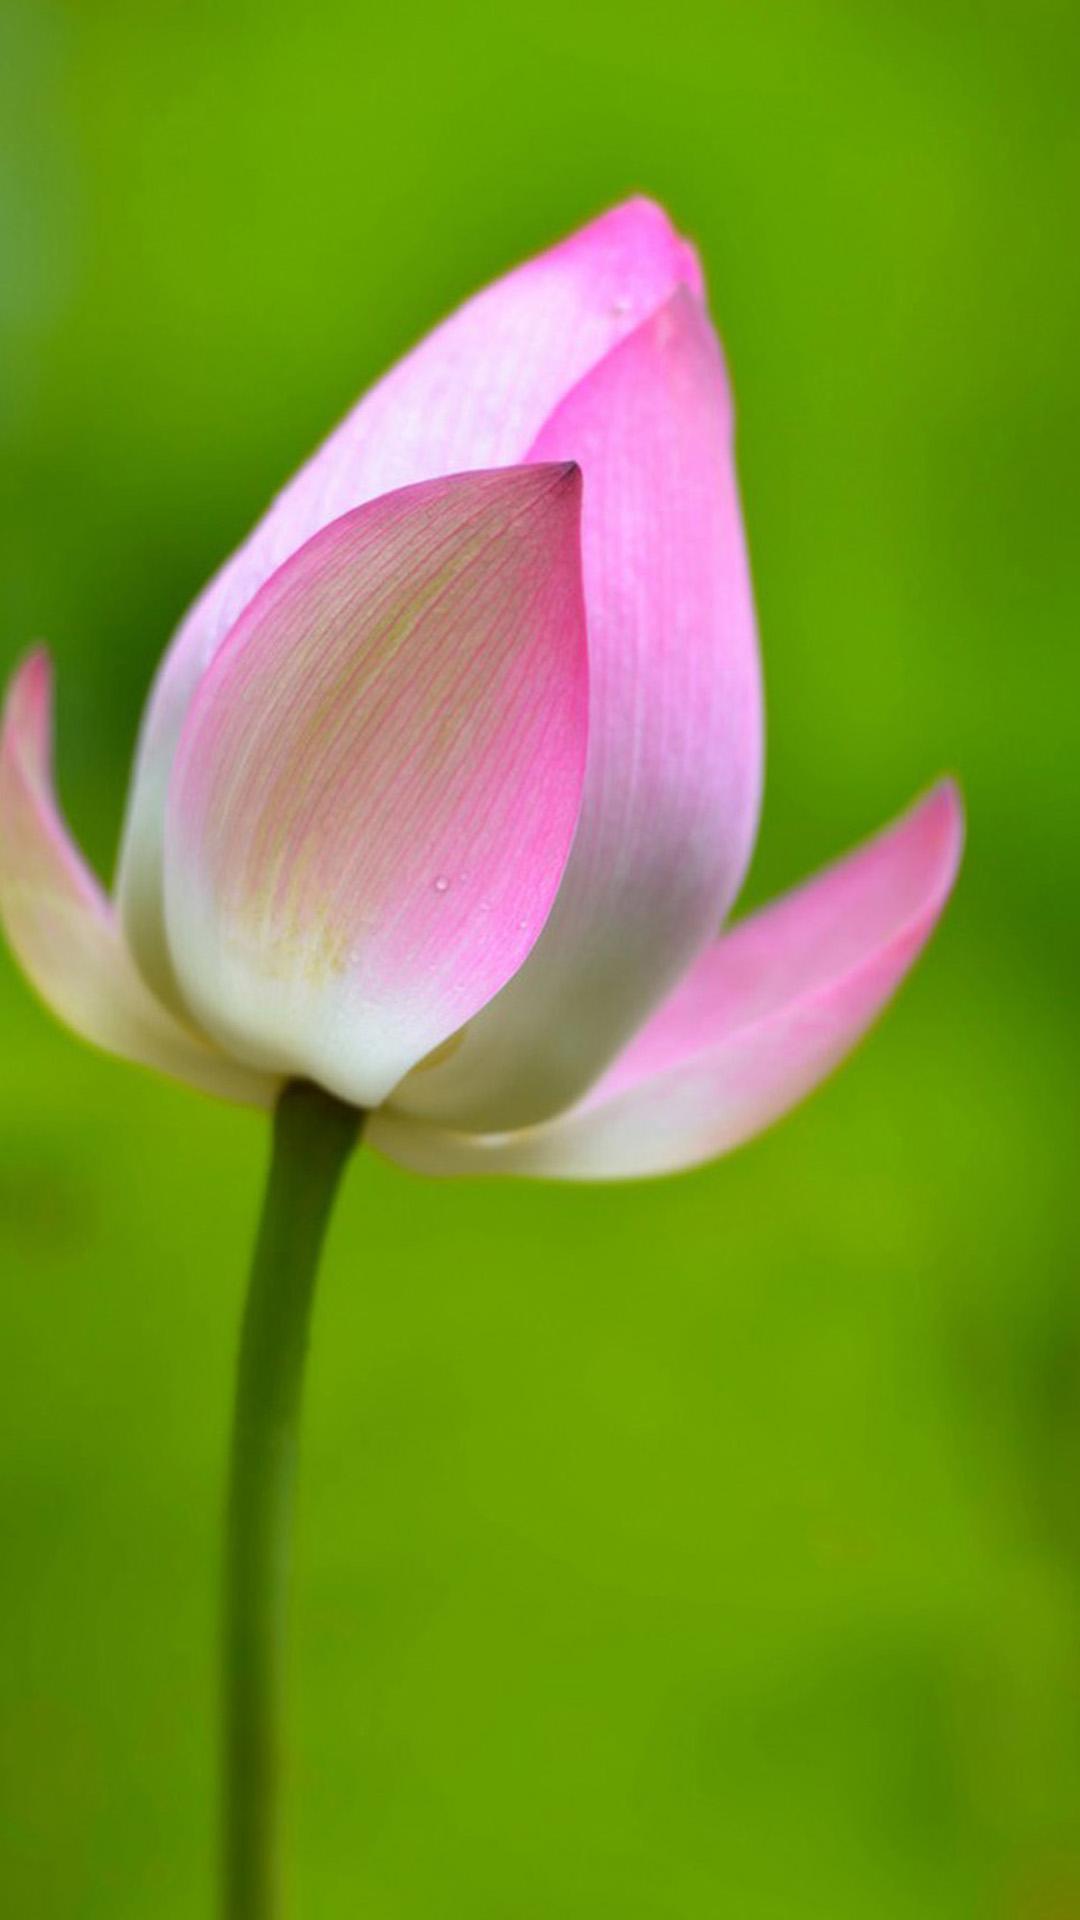 Lotus Bud Flower Macro iPhone 8 Wallpaper Free Download